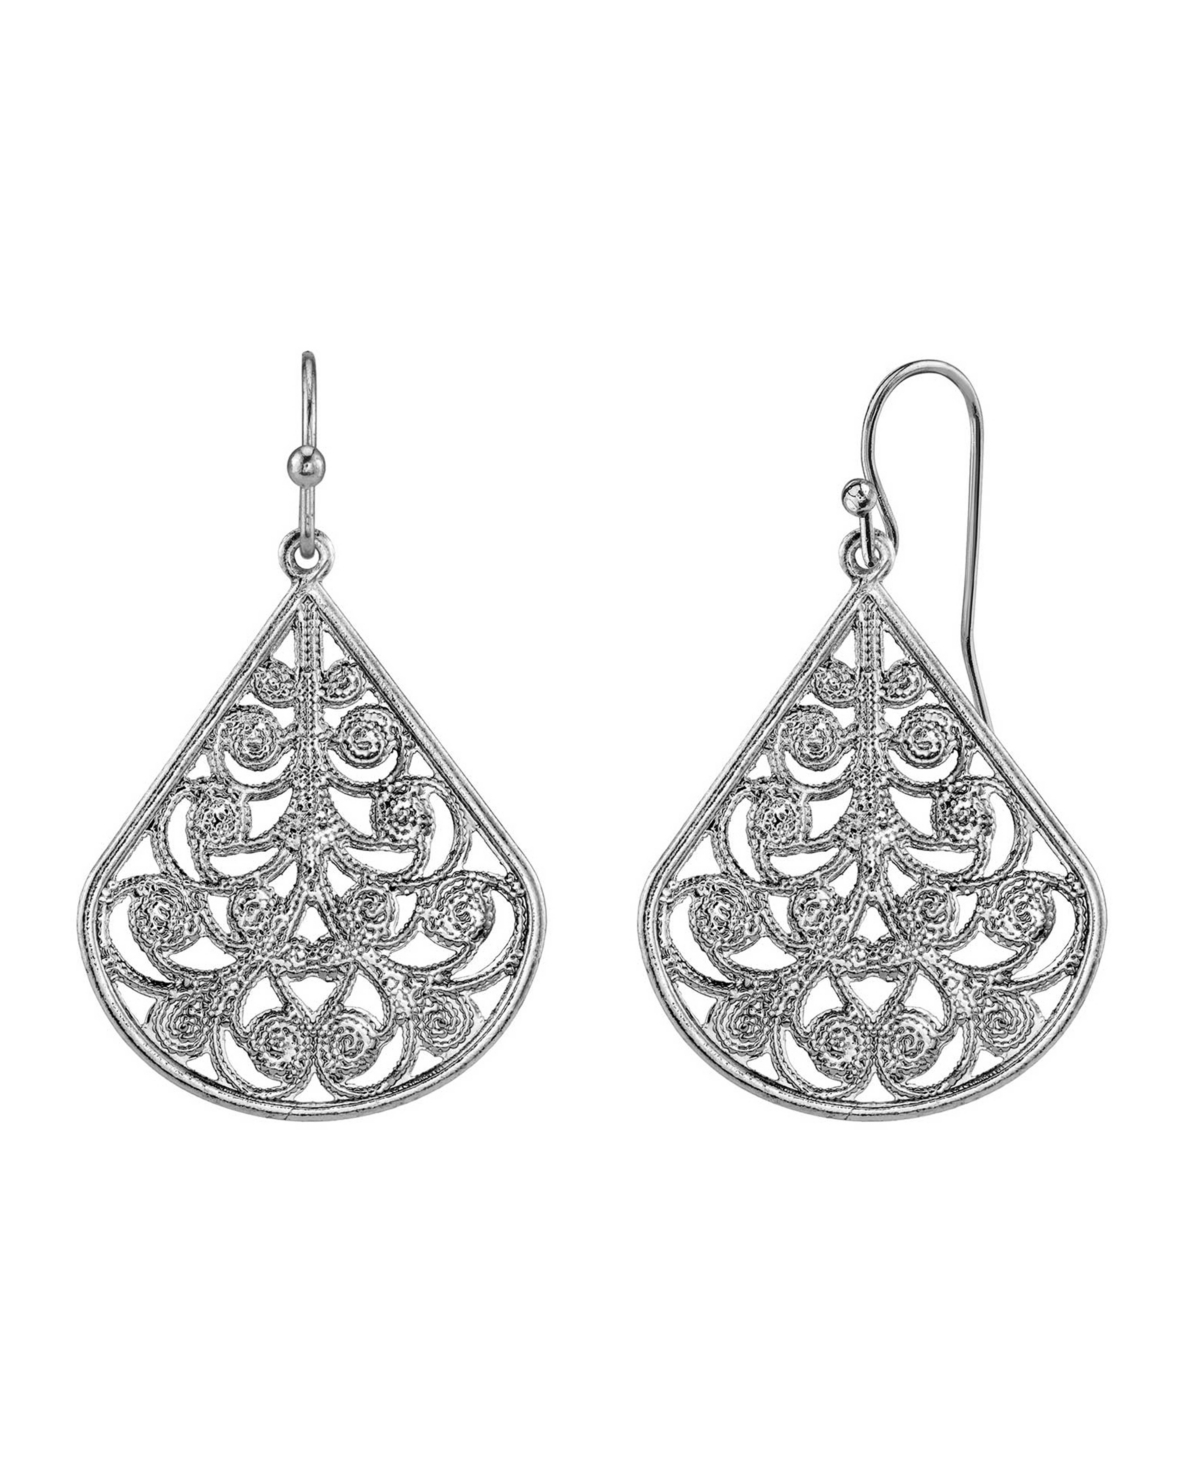 2028 Gold Tone Filigree Pear-shaped Earrings In Silver